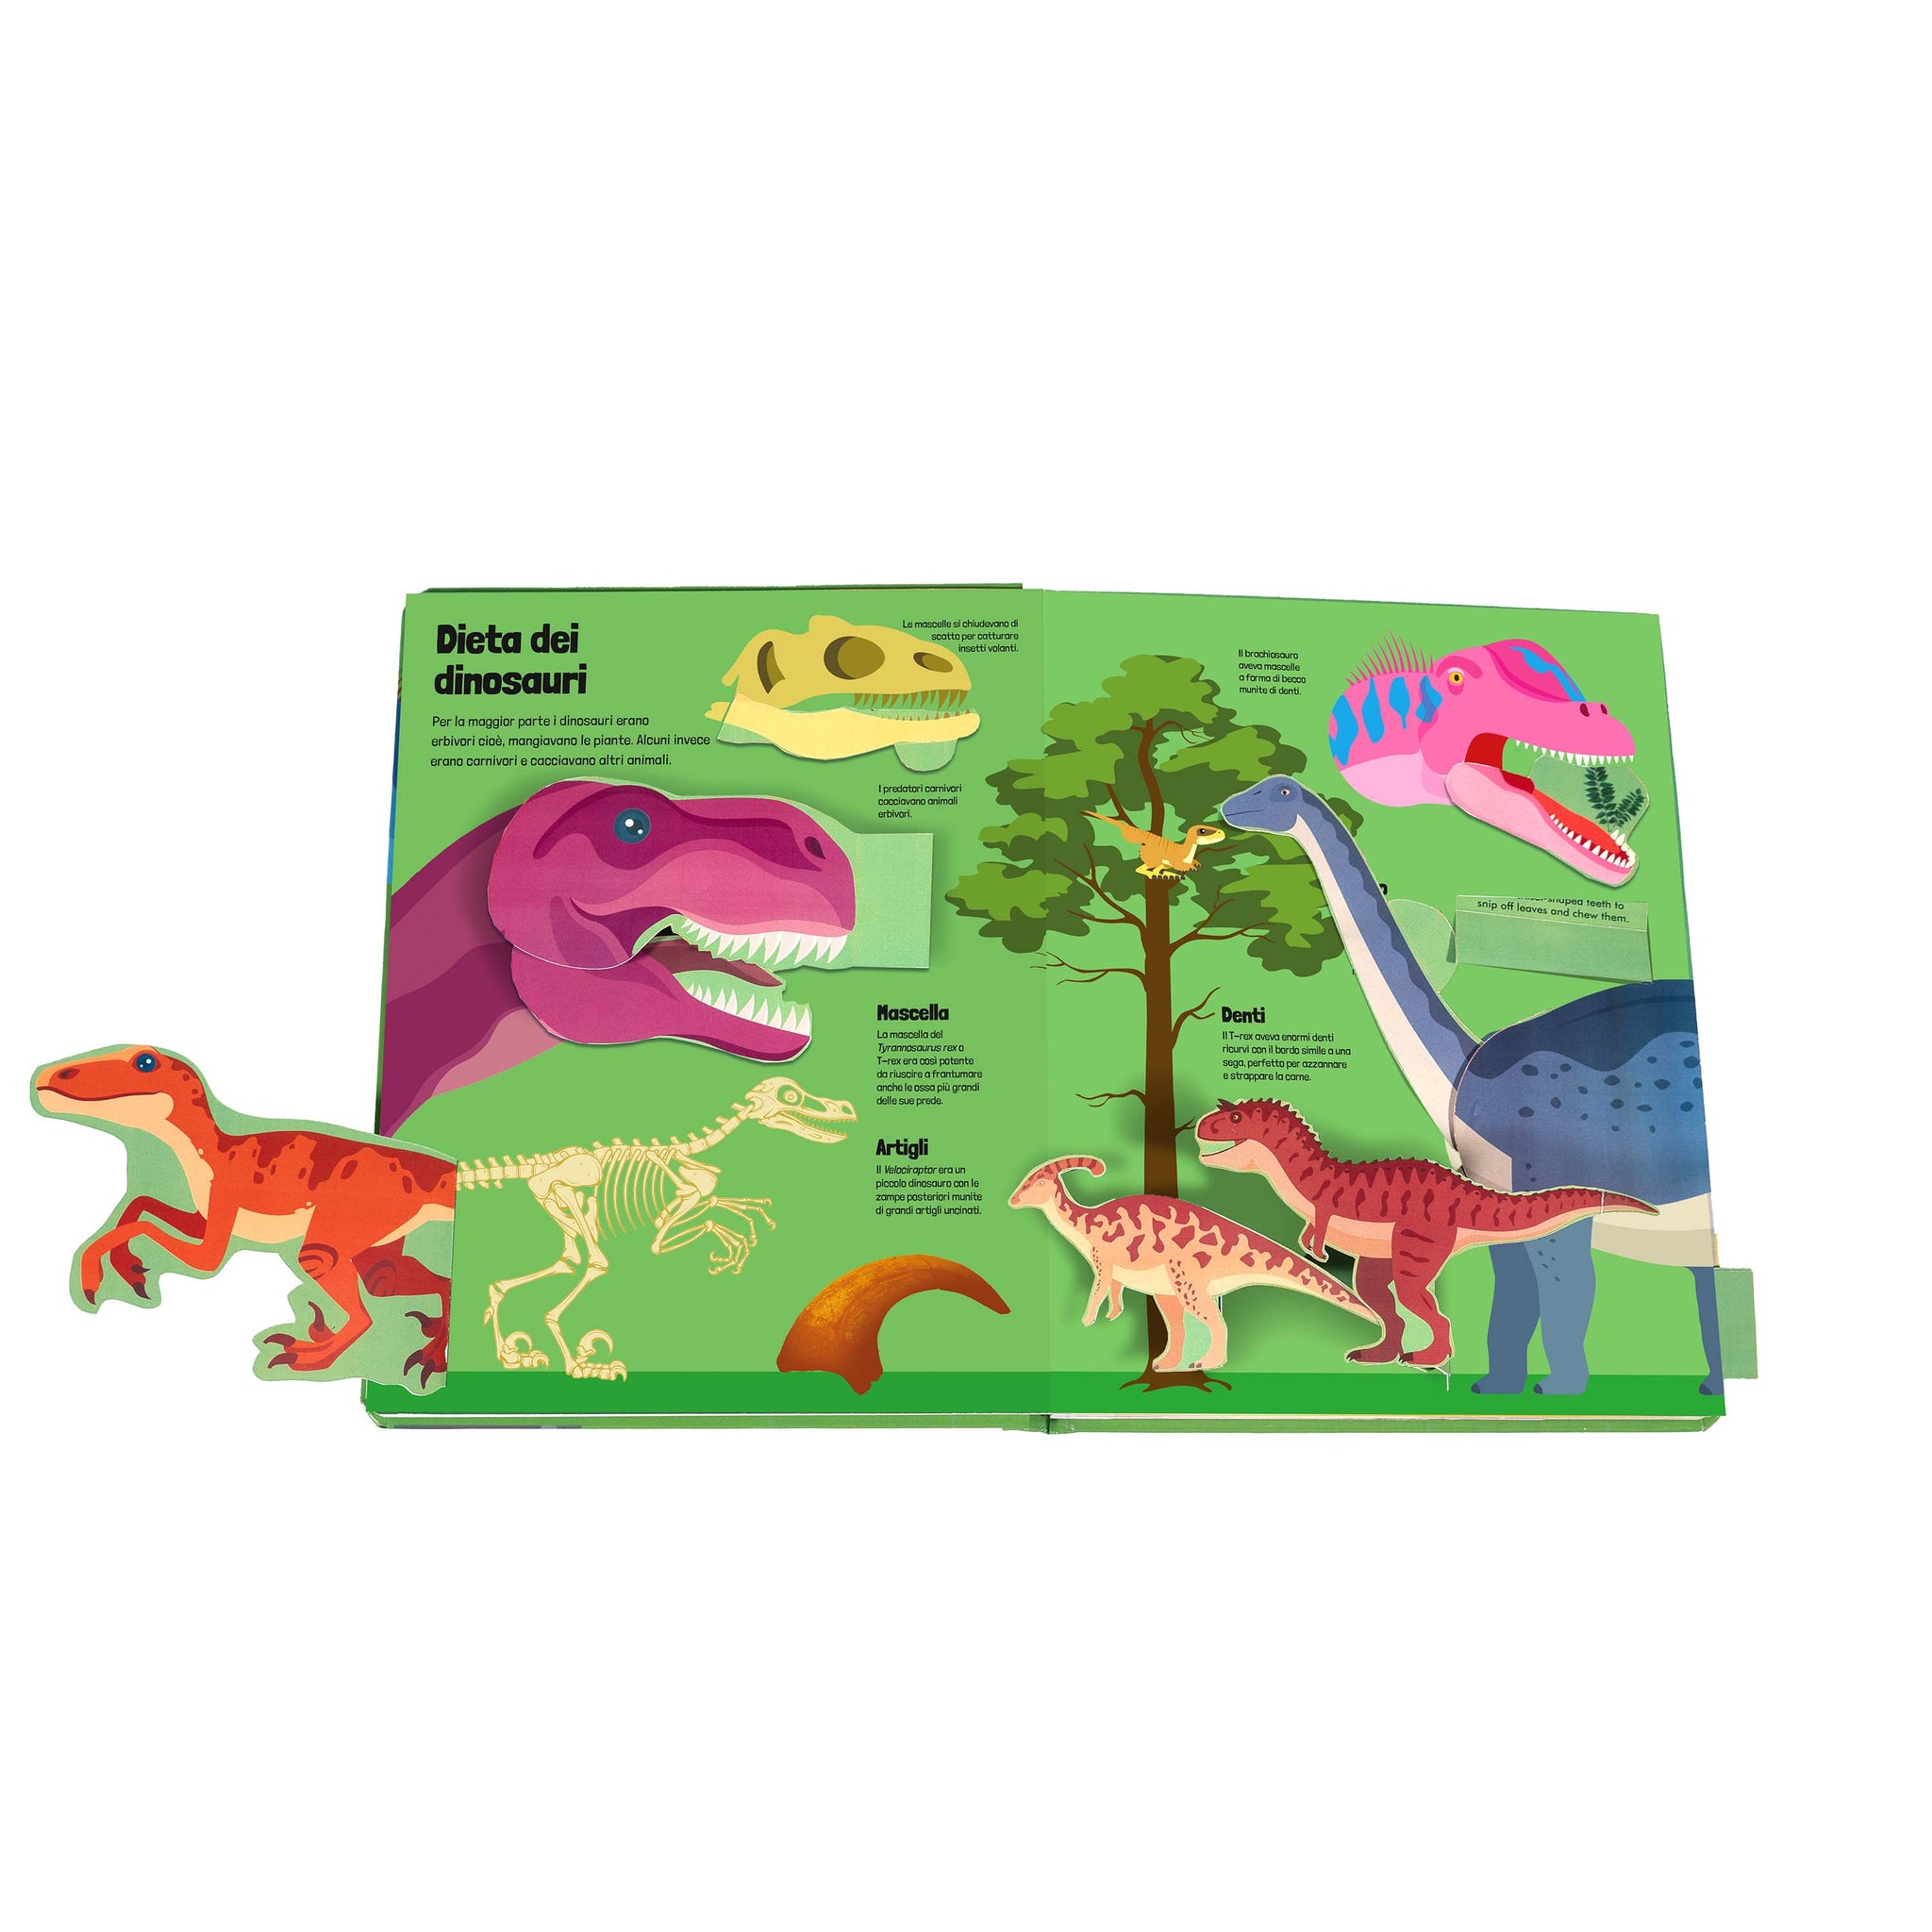 Dinosaurs - The Flip Flap Book